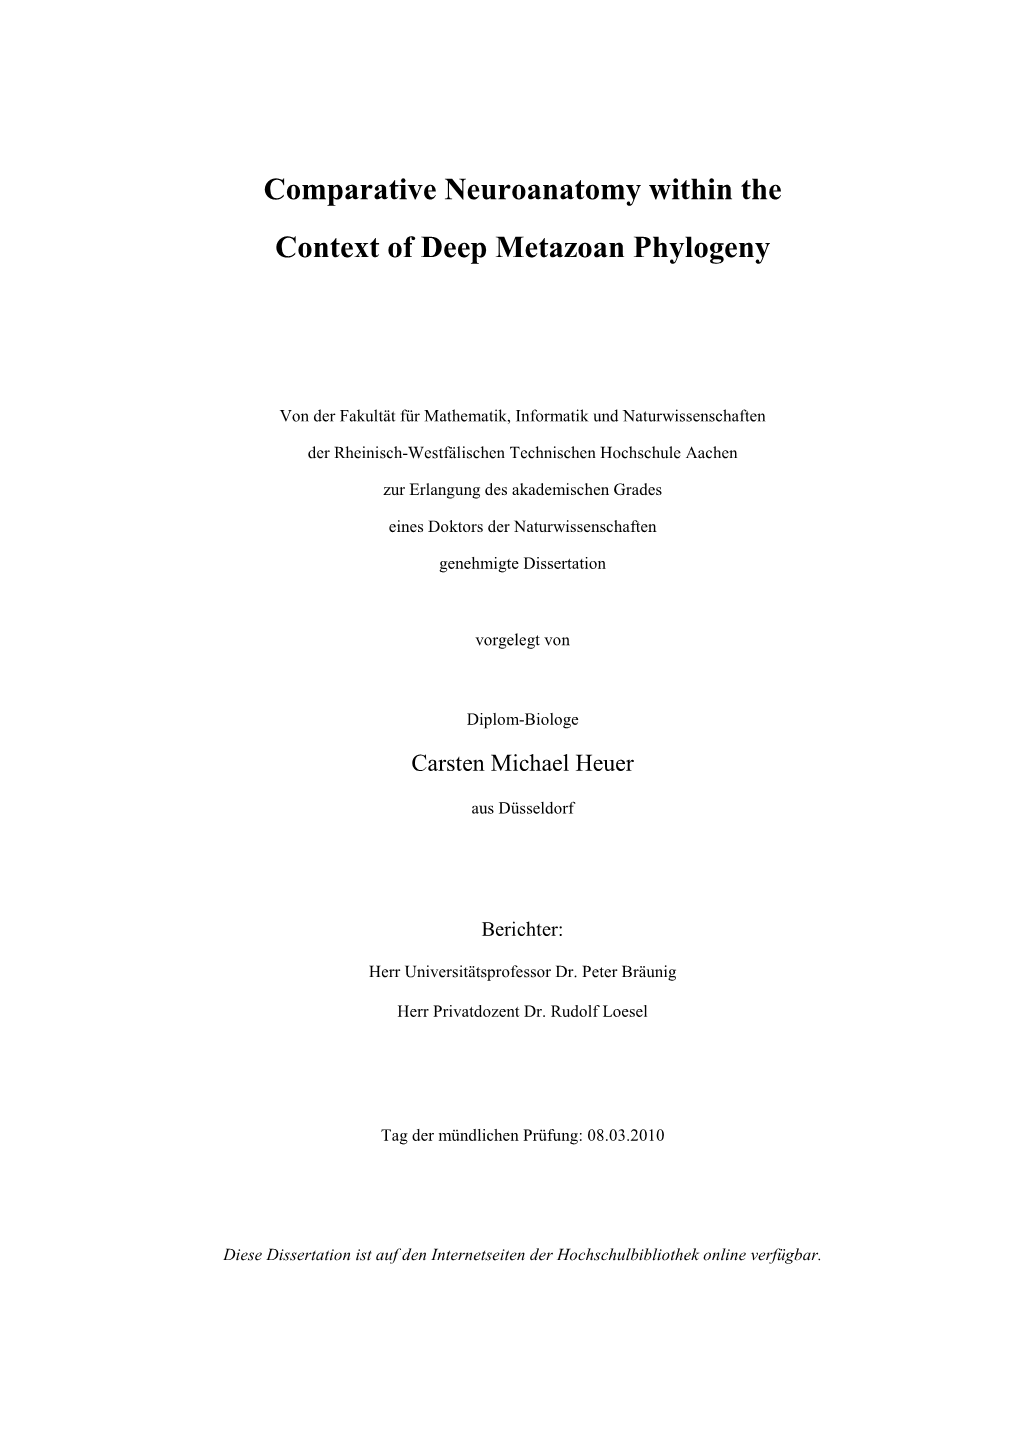 Comparative Neuroanatomy Within the Context of Deep Metazoan Phylogeny